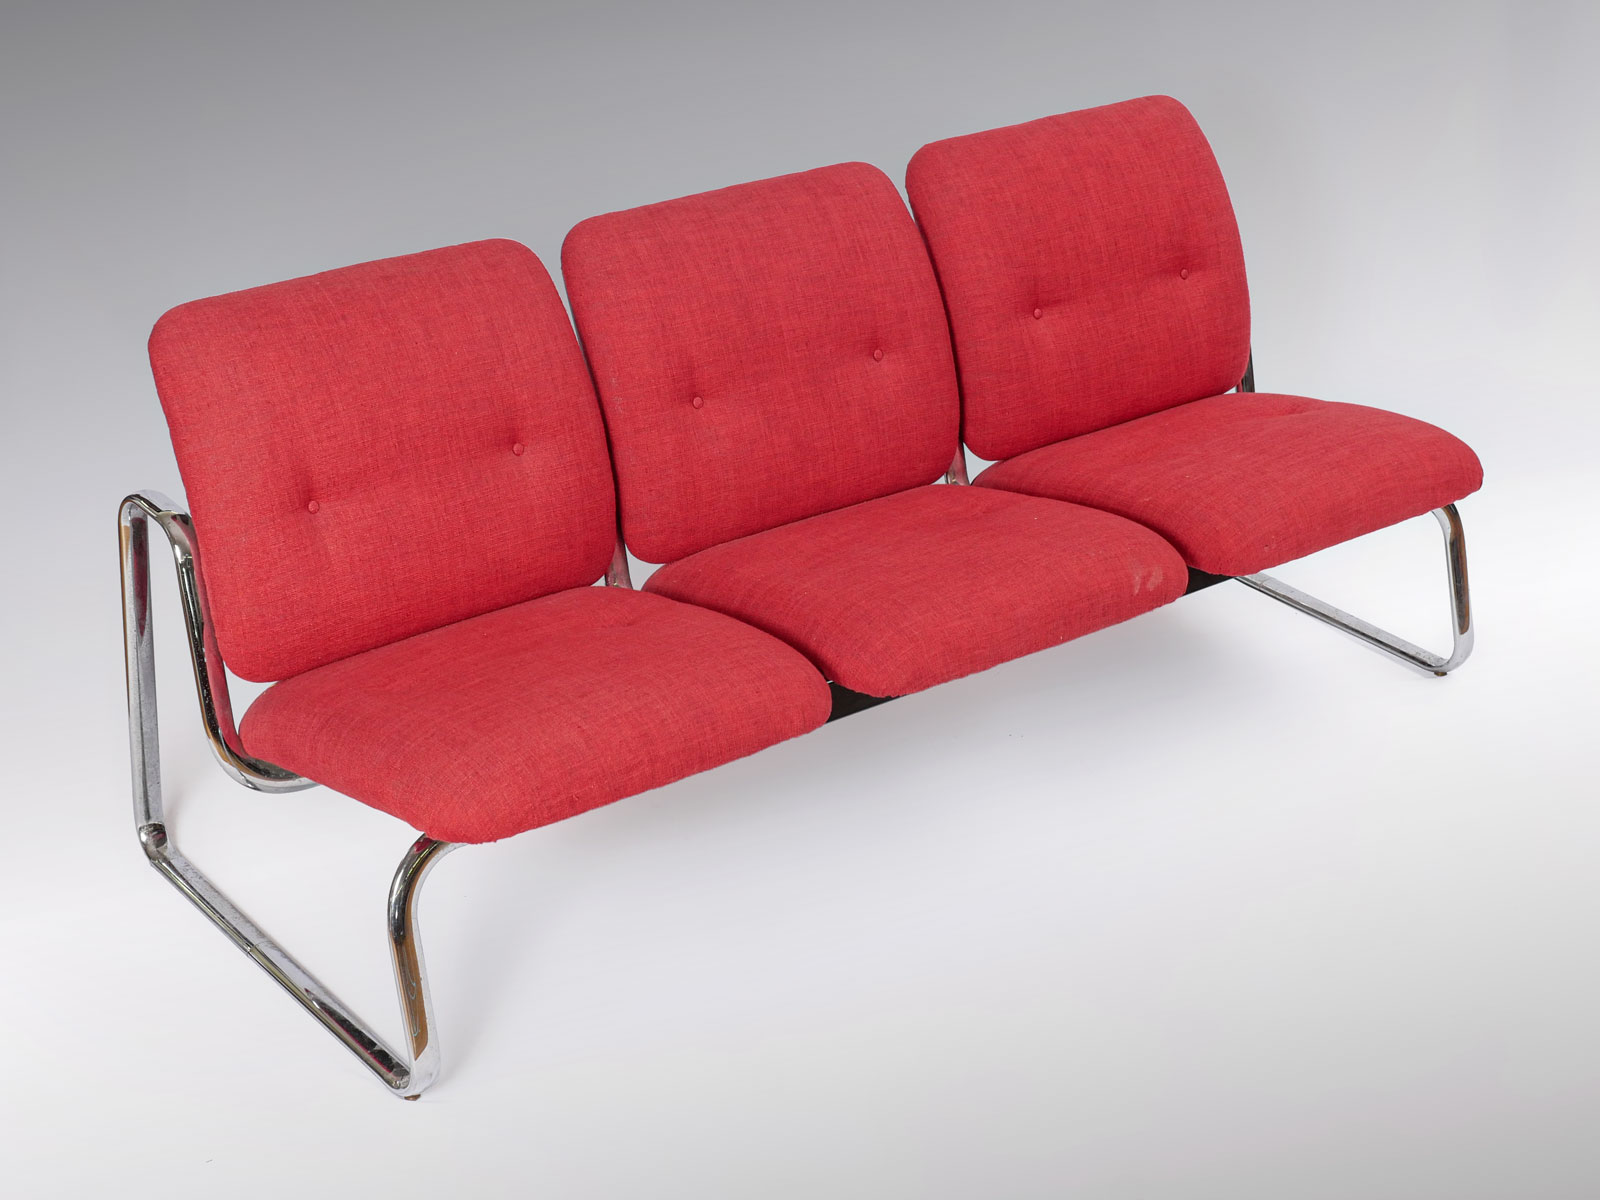 MODERN INDUSTRIAL 3-SEAT BENCH: